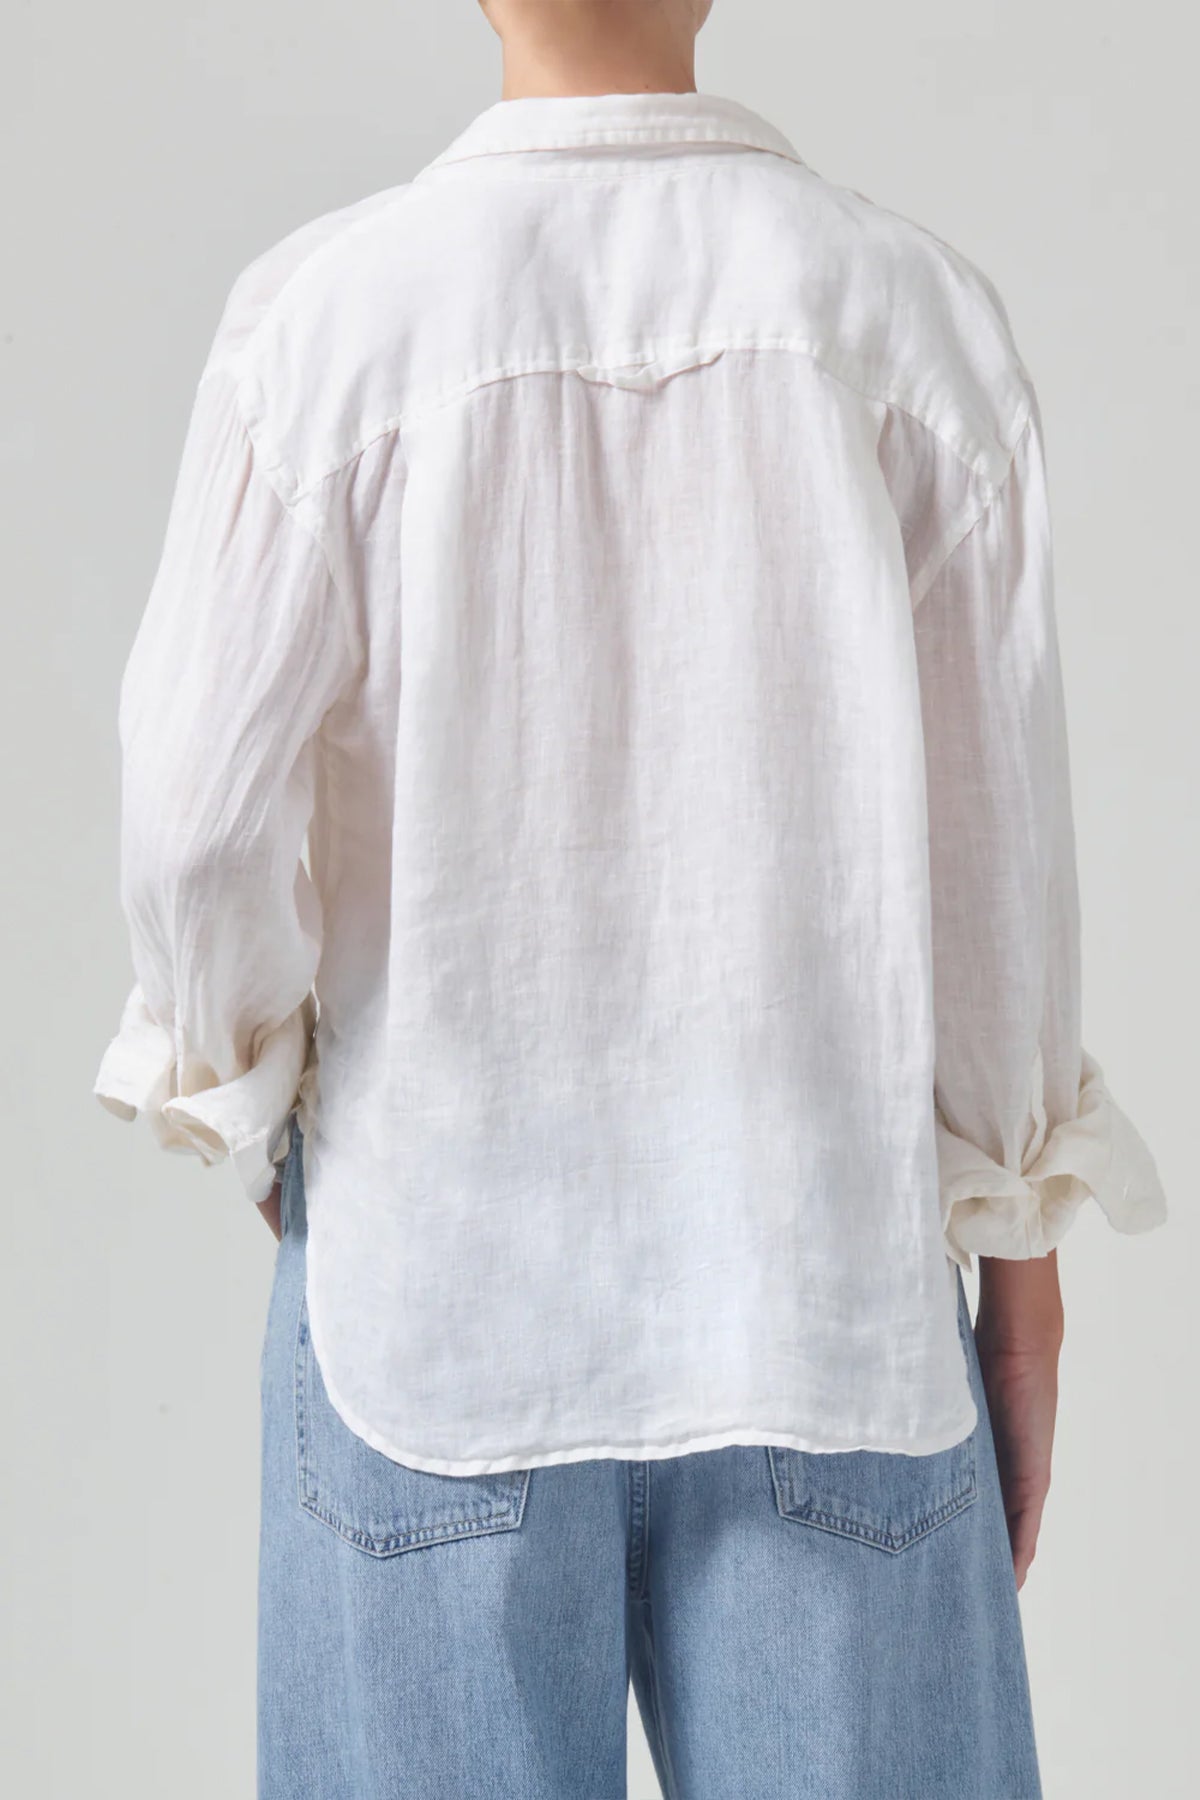 Kayla Shrunken Linen Shirt in Vanilla - shop - olivia.com